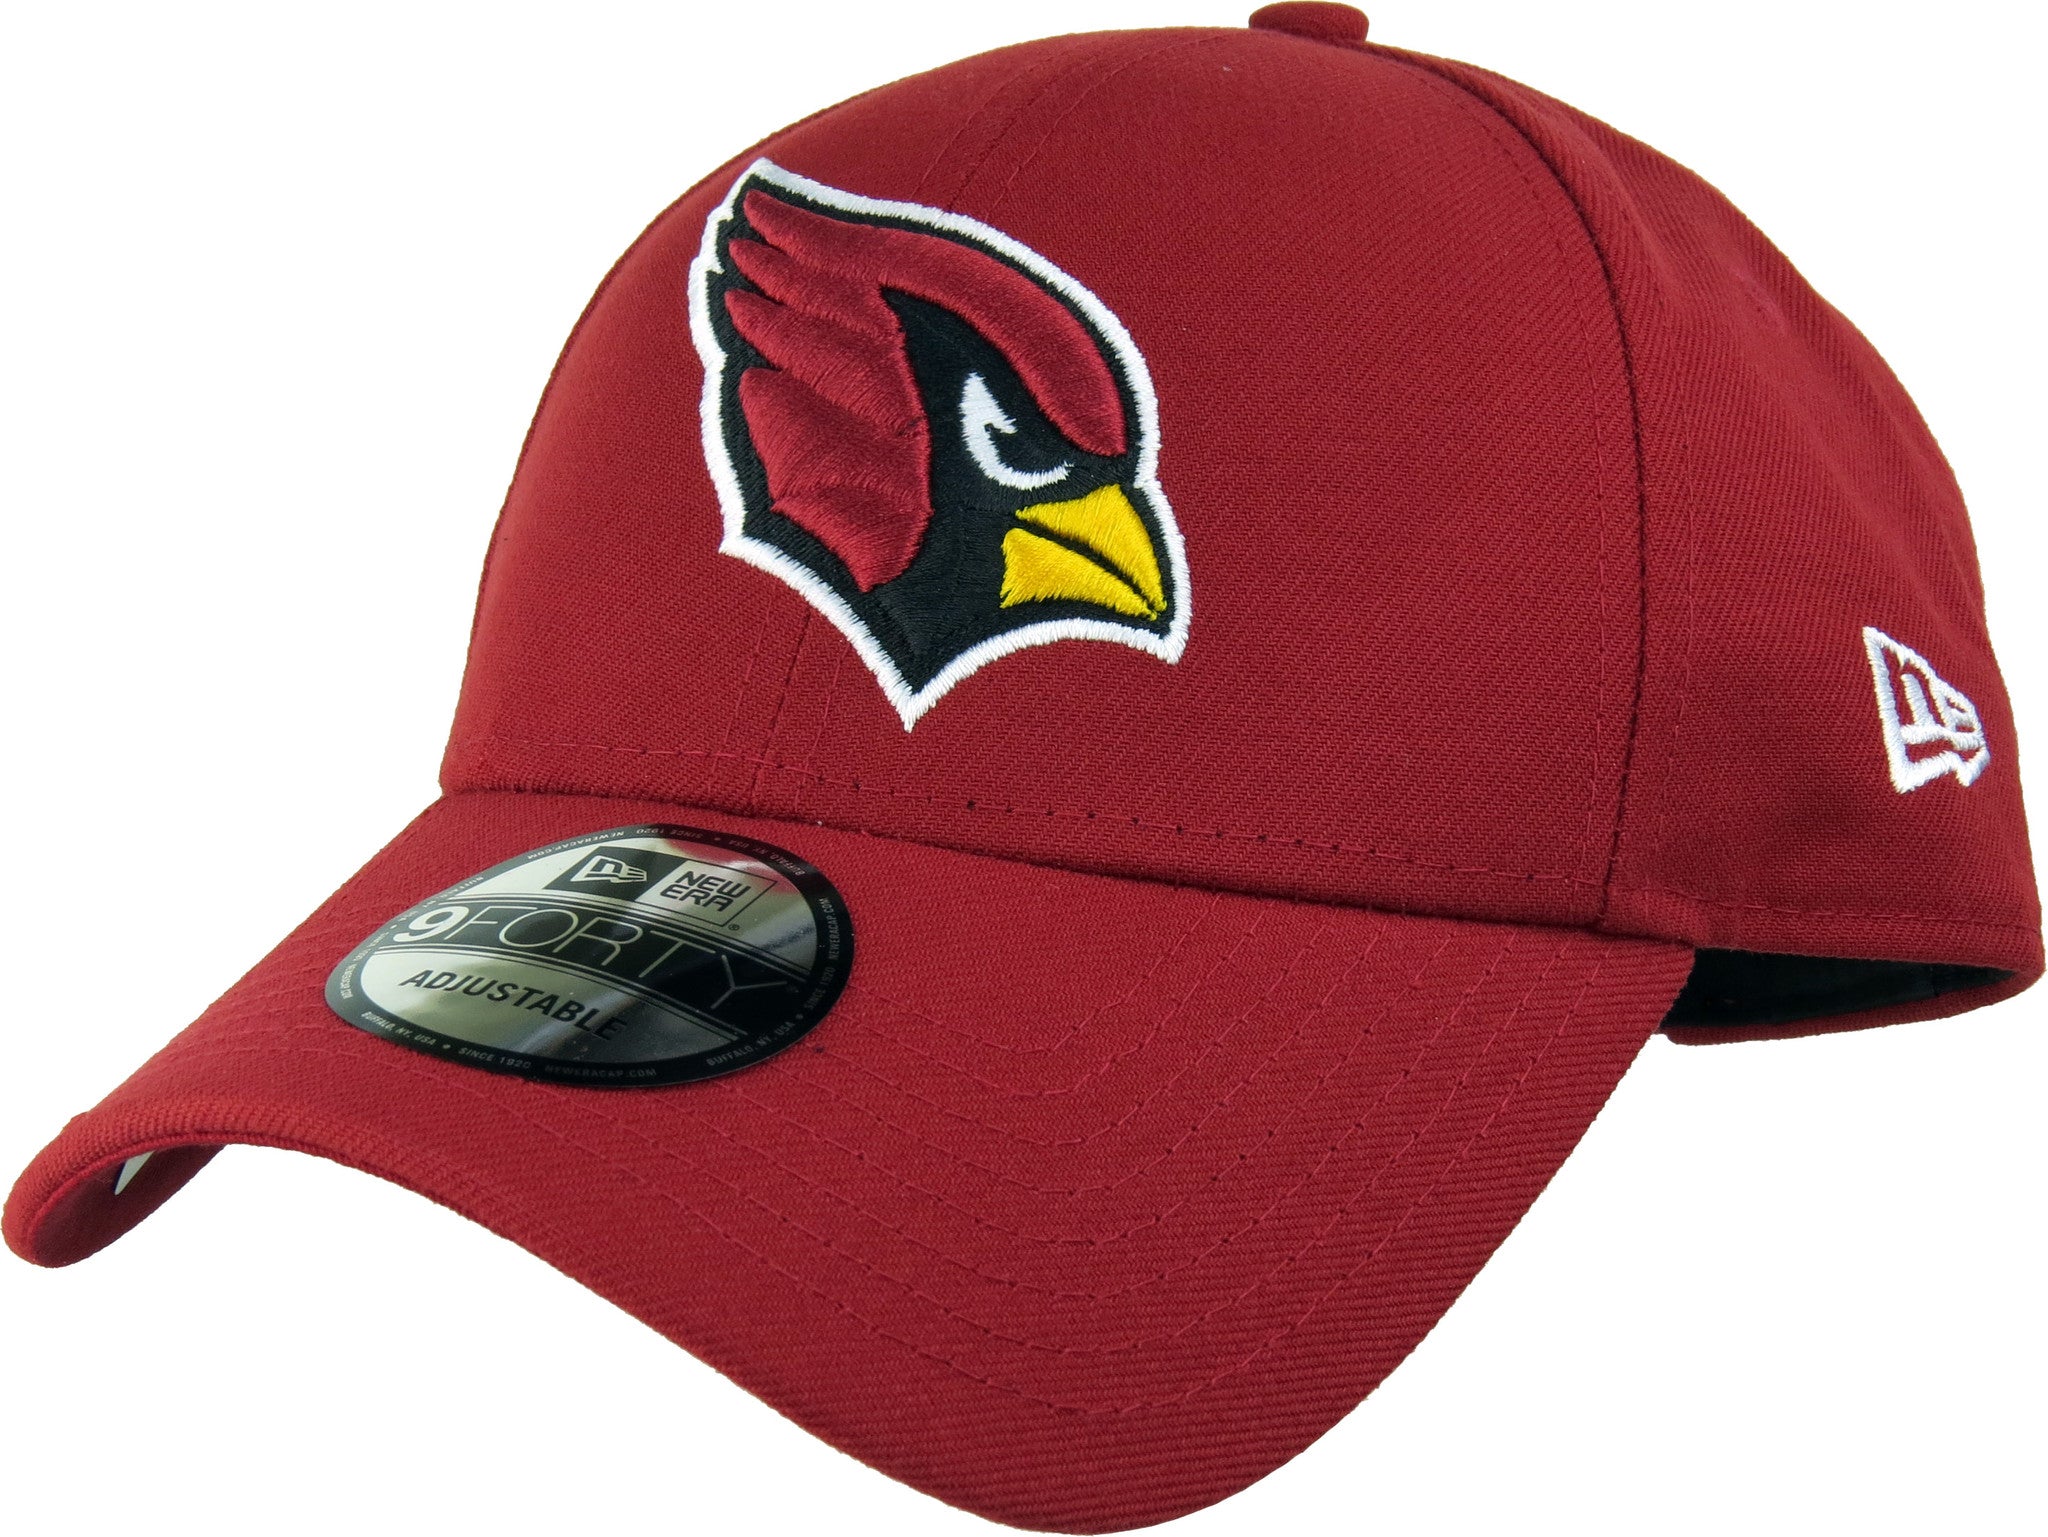 Arizona Cardinals New Era 940 The League NFL Adjustable Cap